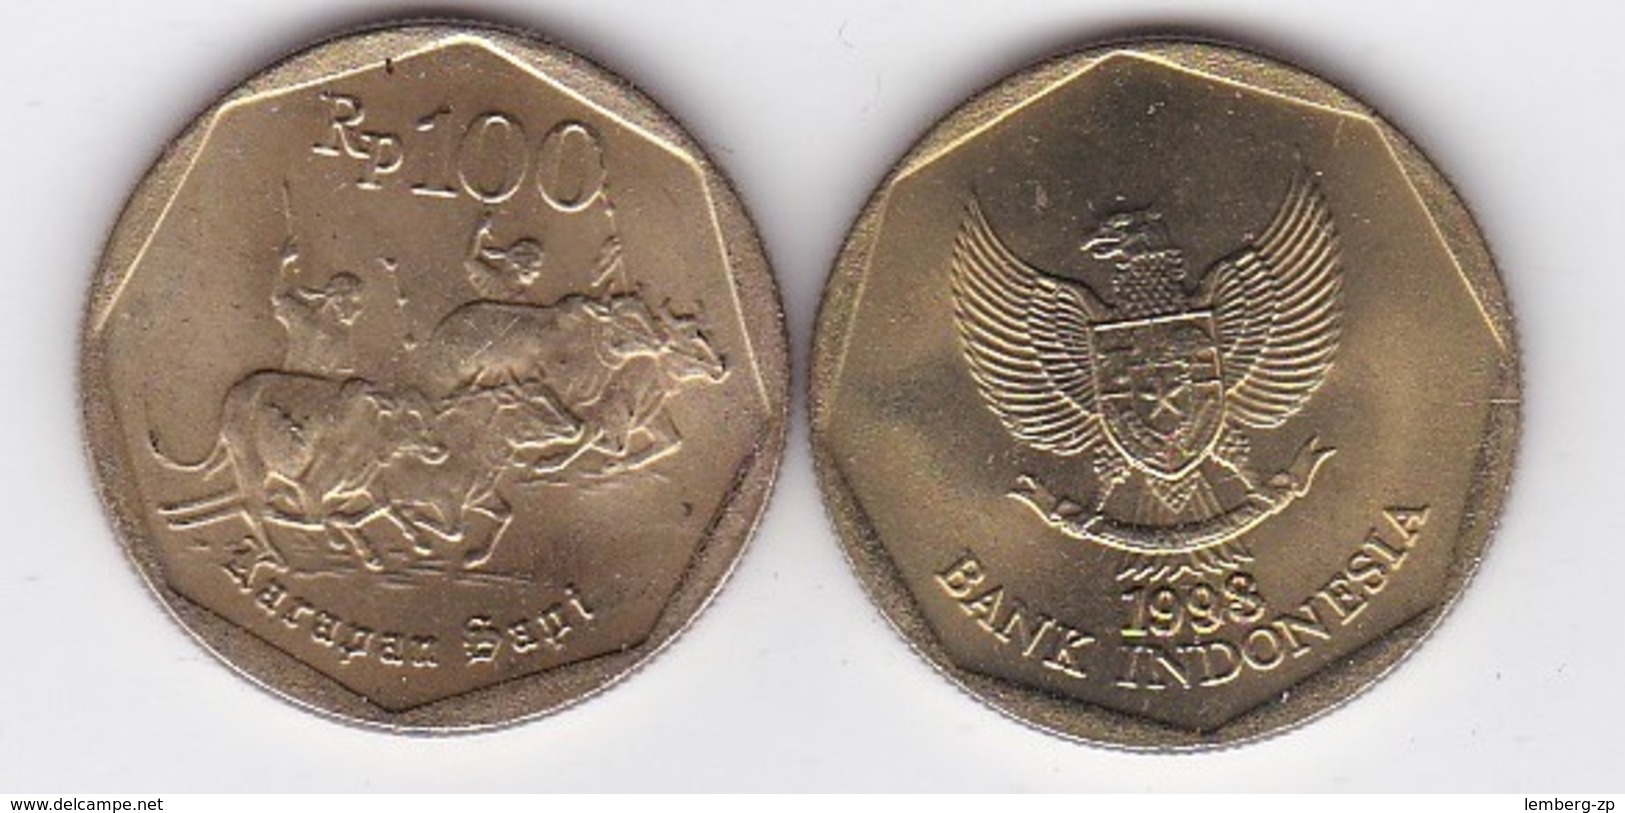 Indonesia - 100 Rupiah 1998 UNC Lemberg-Zp - Indonesia